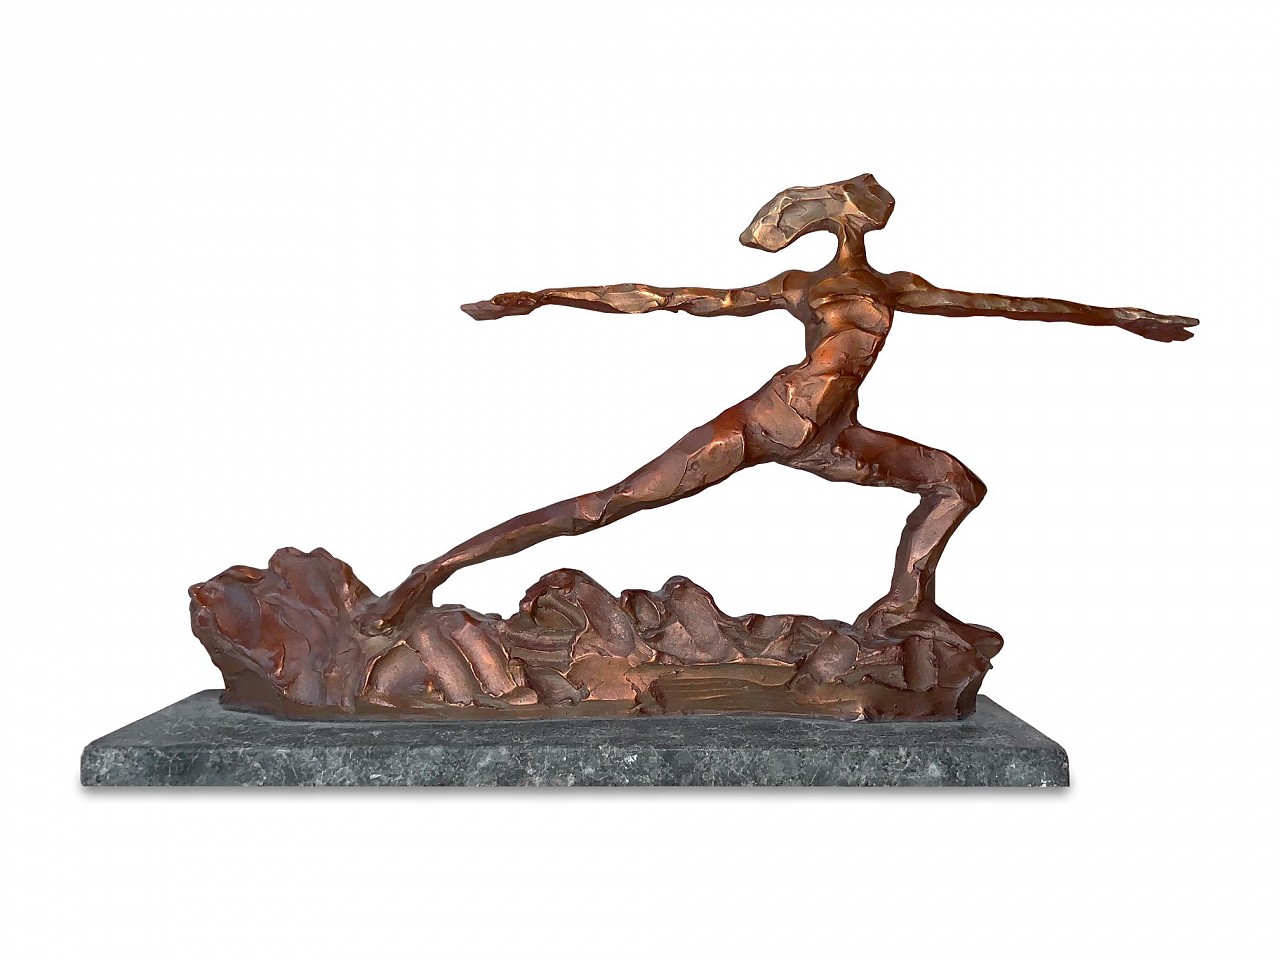 Jane DeDecker, My Serengetti, Ed. 2/21, 2016
bronze, 11 x 19 1/4 x 4 1/4 in. (27.9 x 48.9 x 10.8 cm)
JD190809